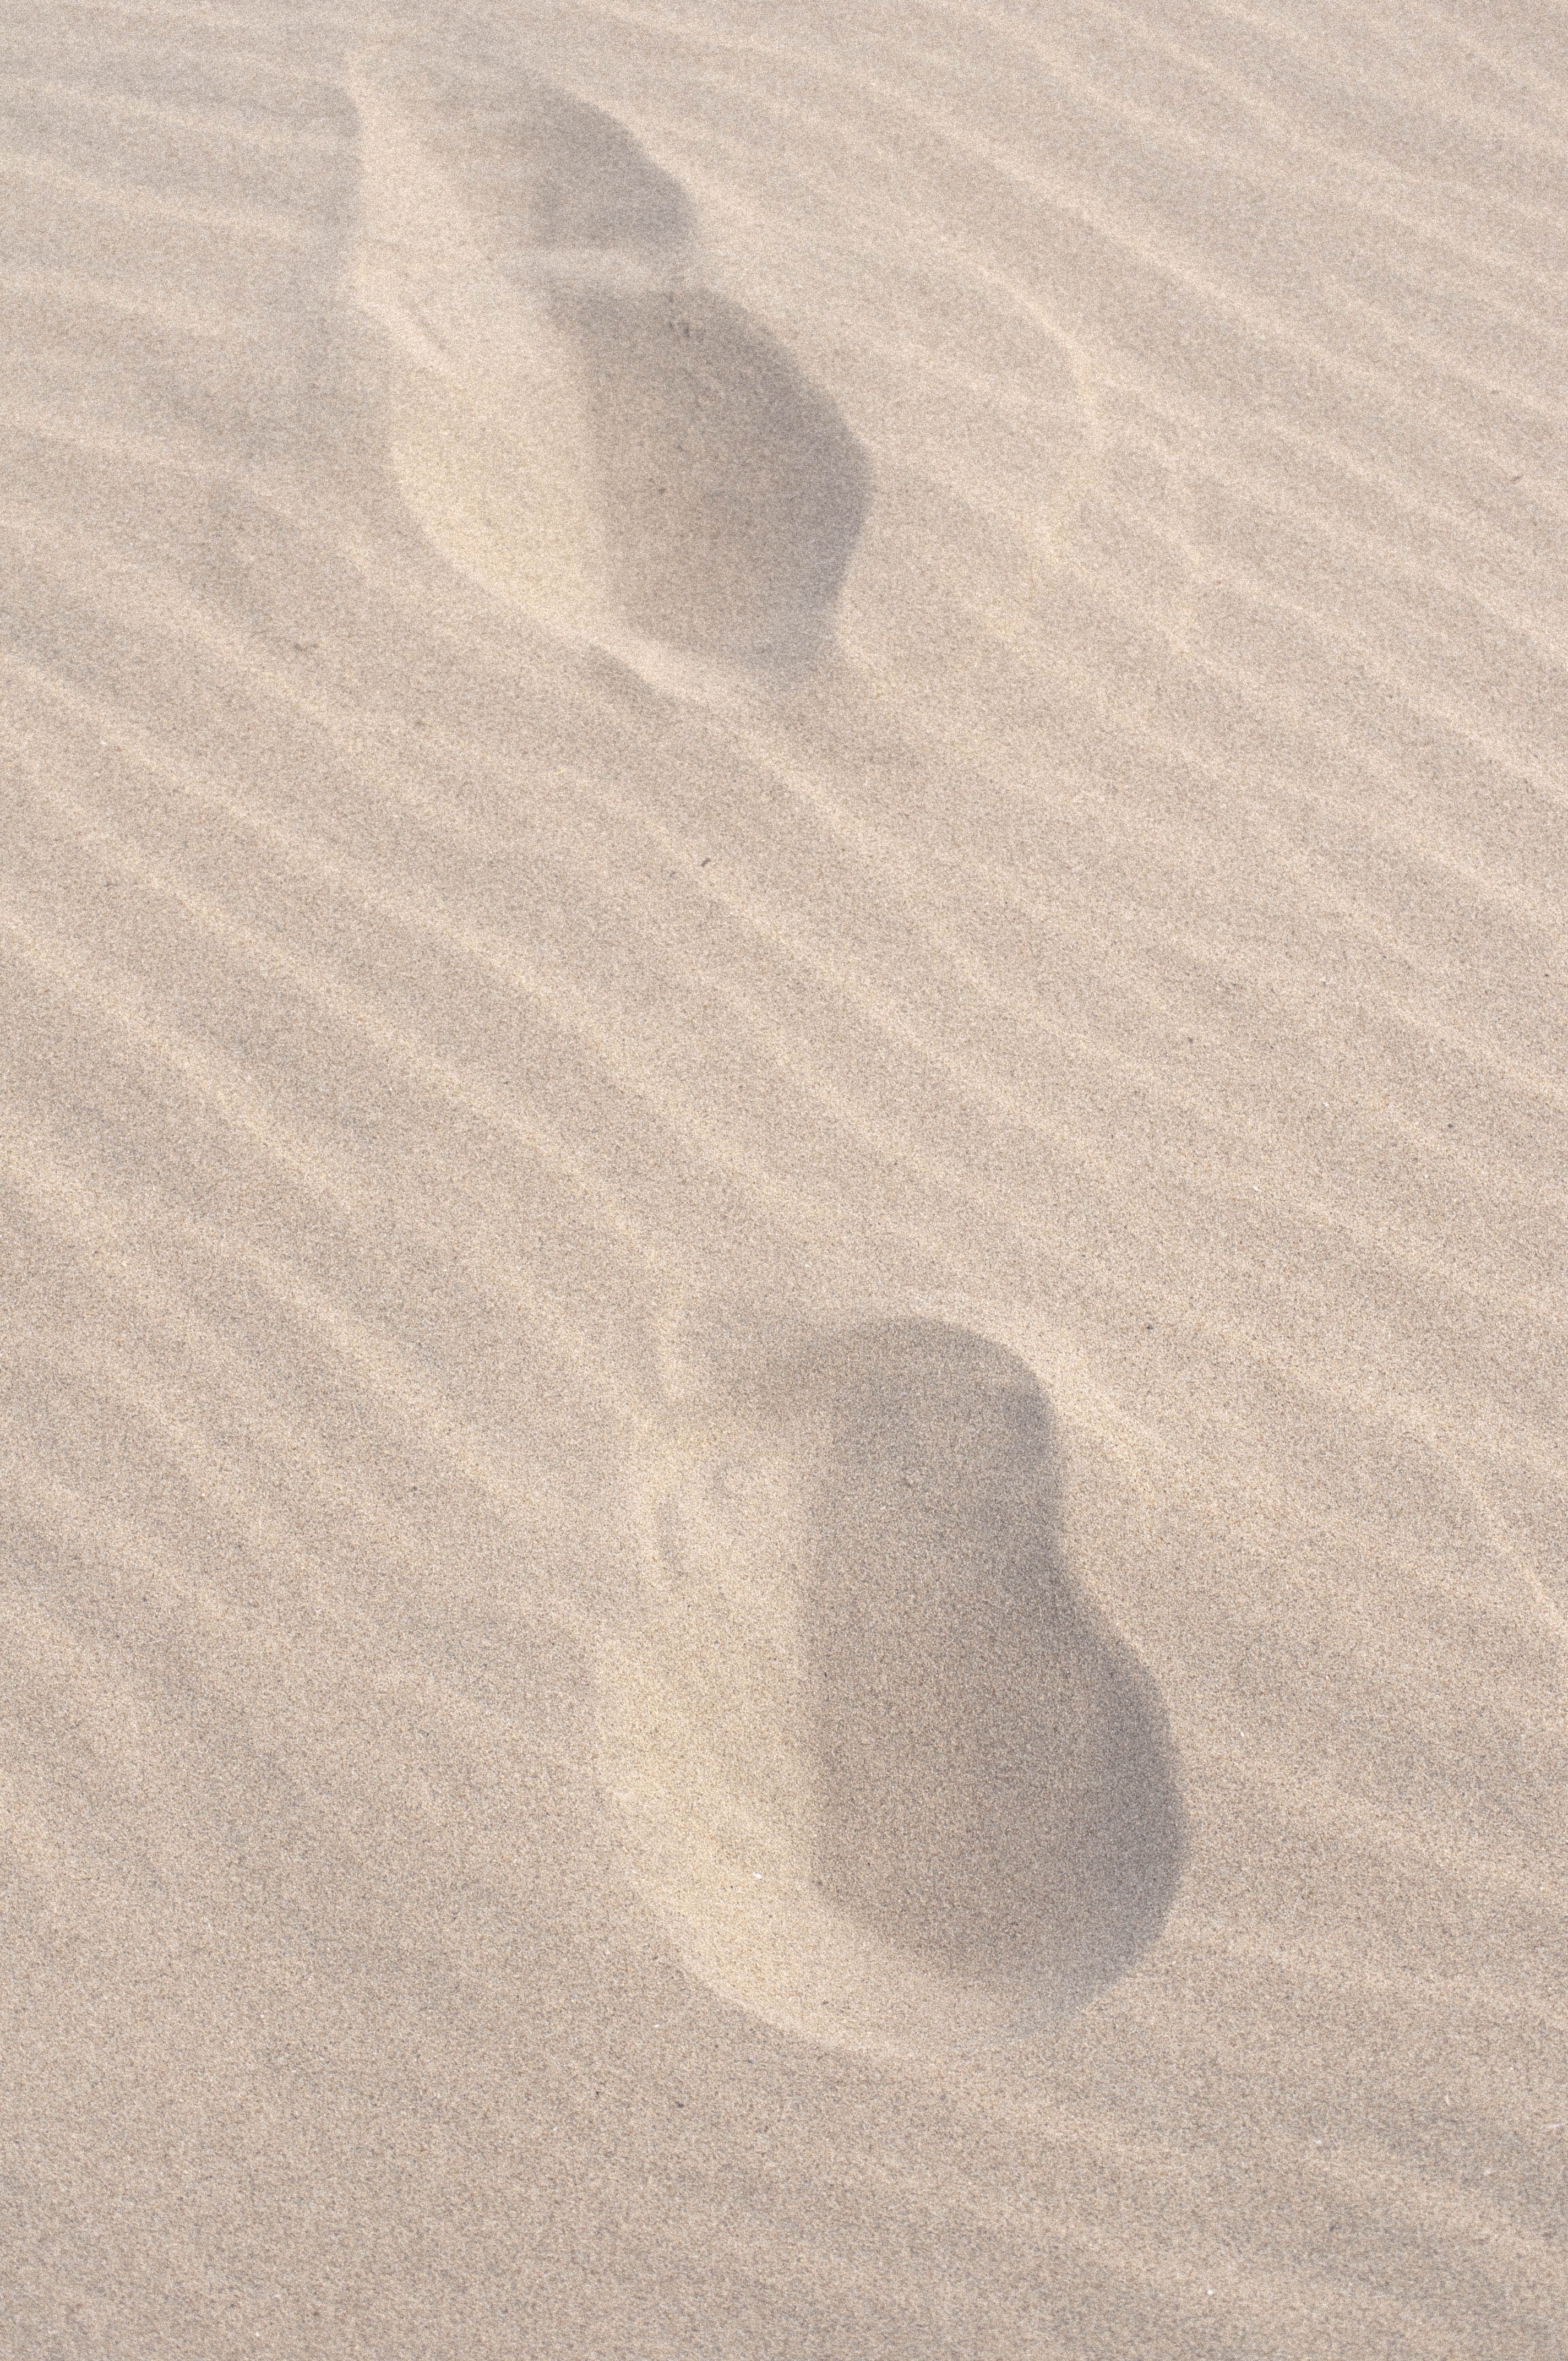 sand, beach, miscellanea, miscellaneous, traces Desktop home screen Wallpaper